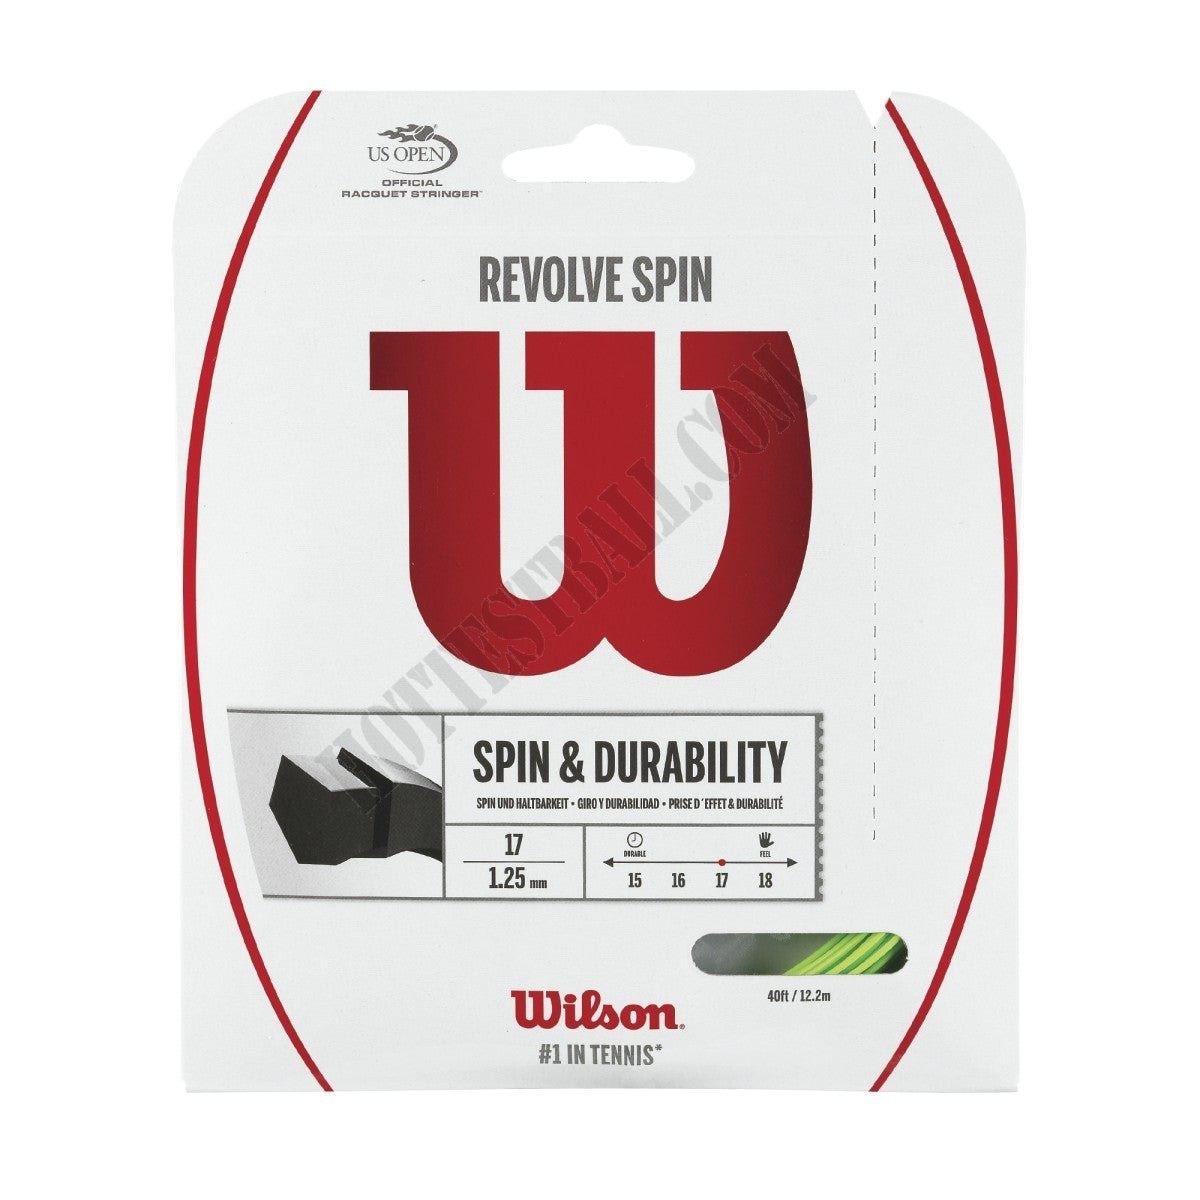 Revolve Spin Tennis String - Set - Wilson Discount Store - Revolve Spin Tennis String - Set - Wilson Discount Store